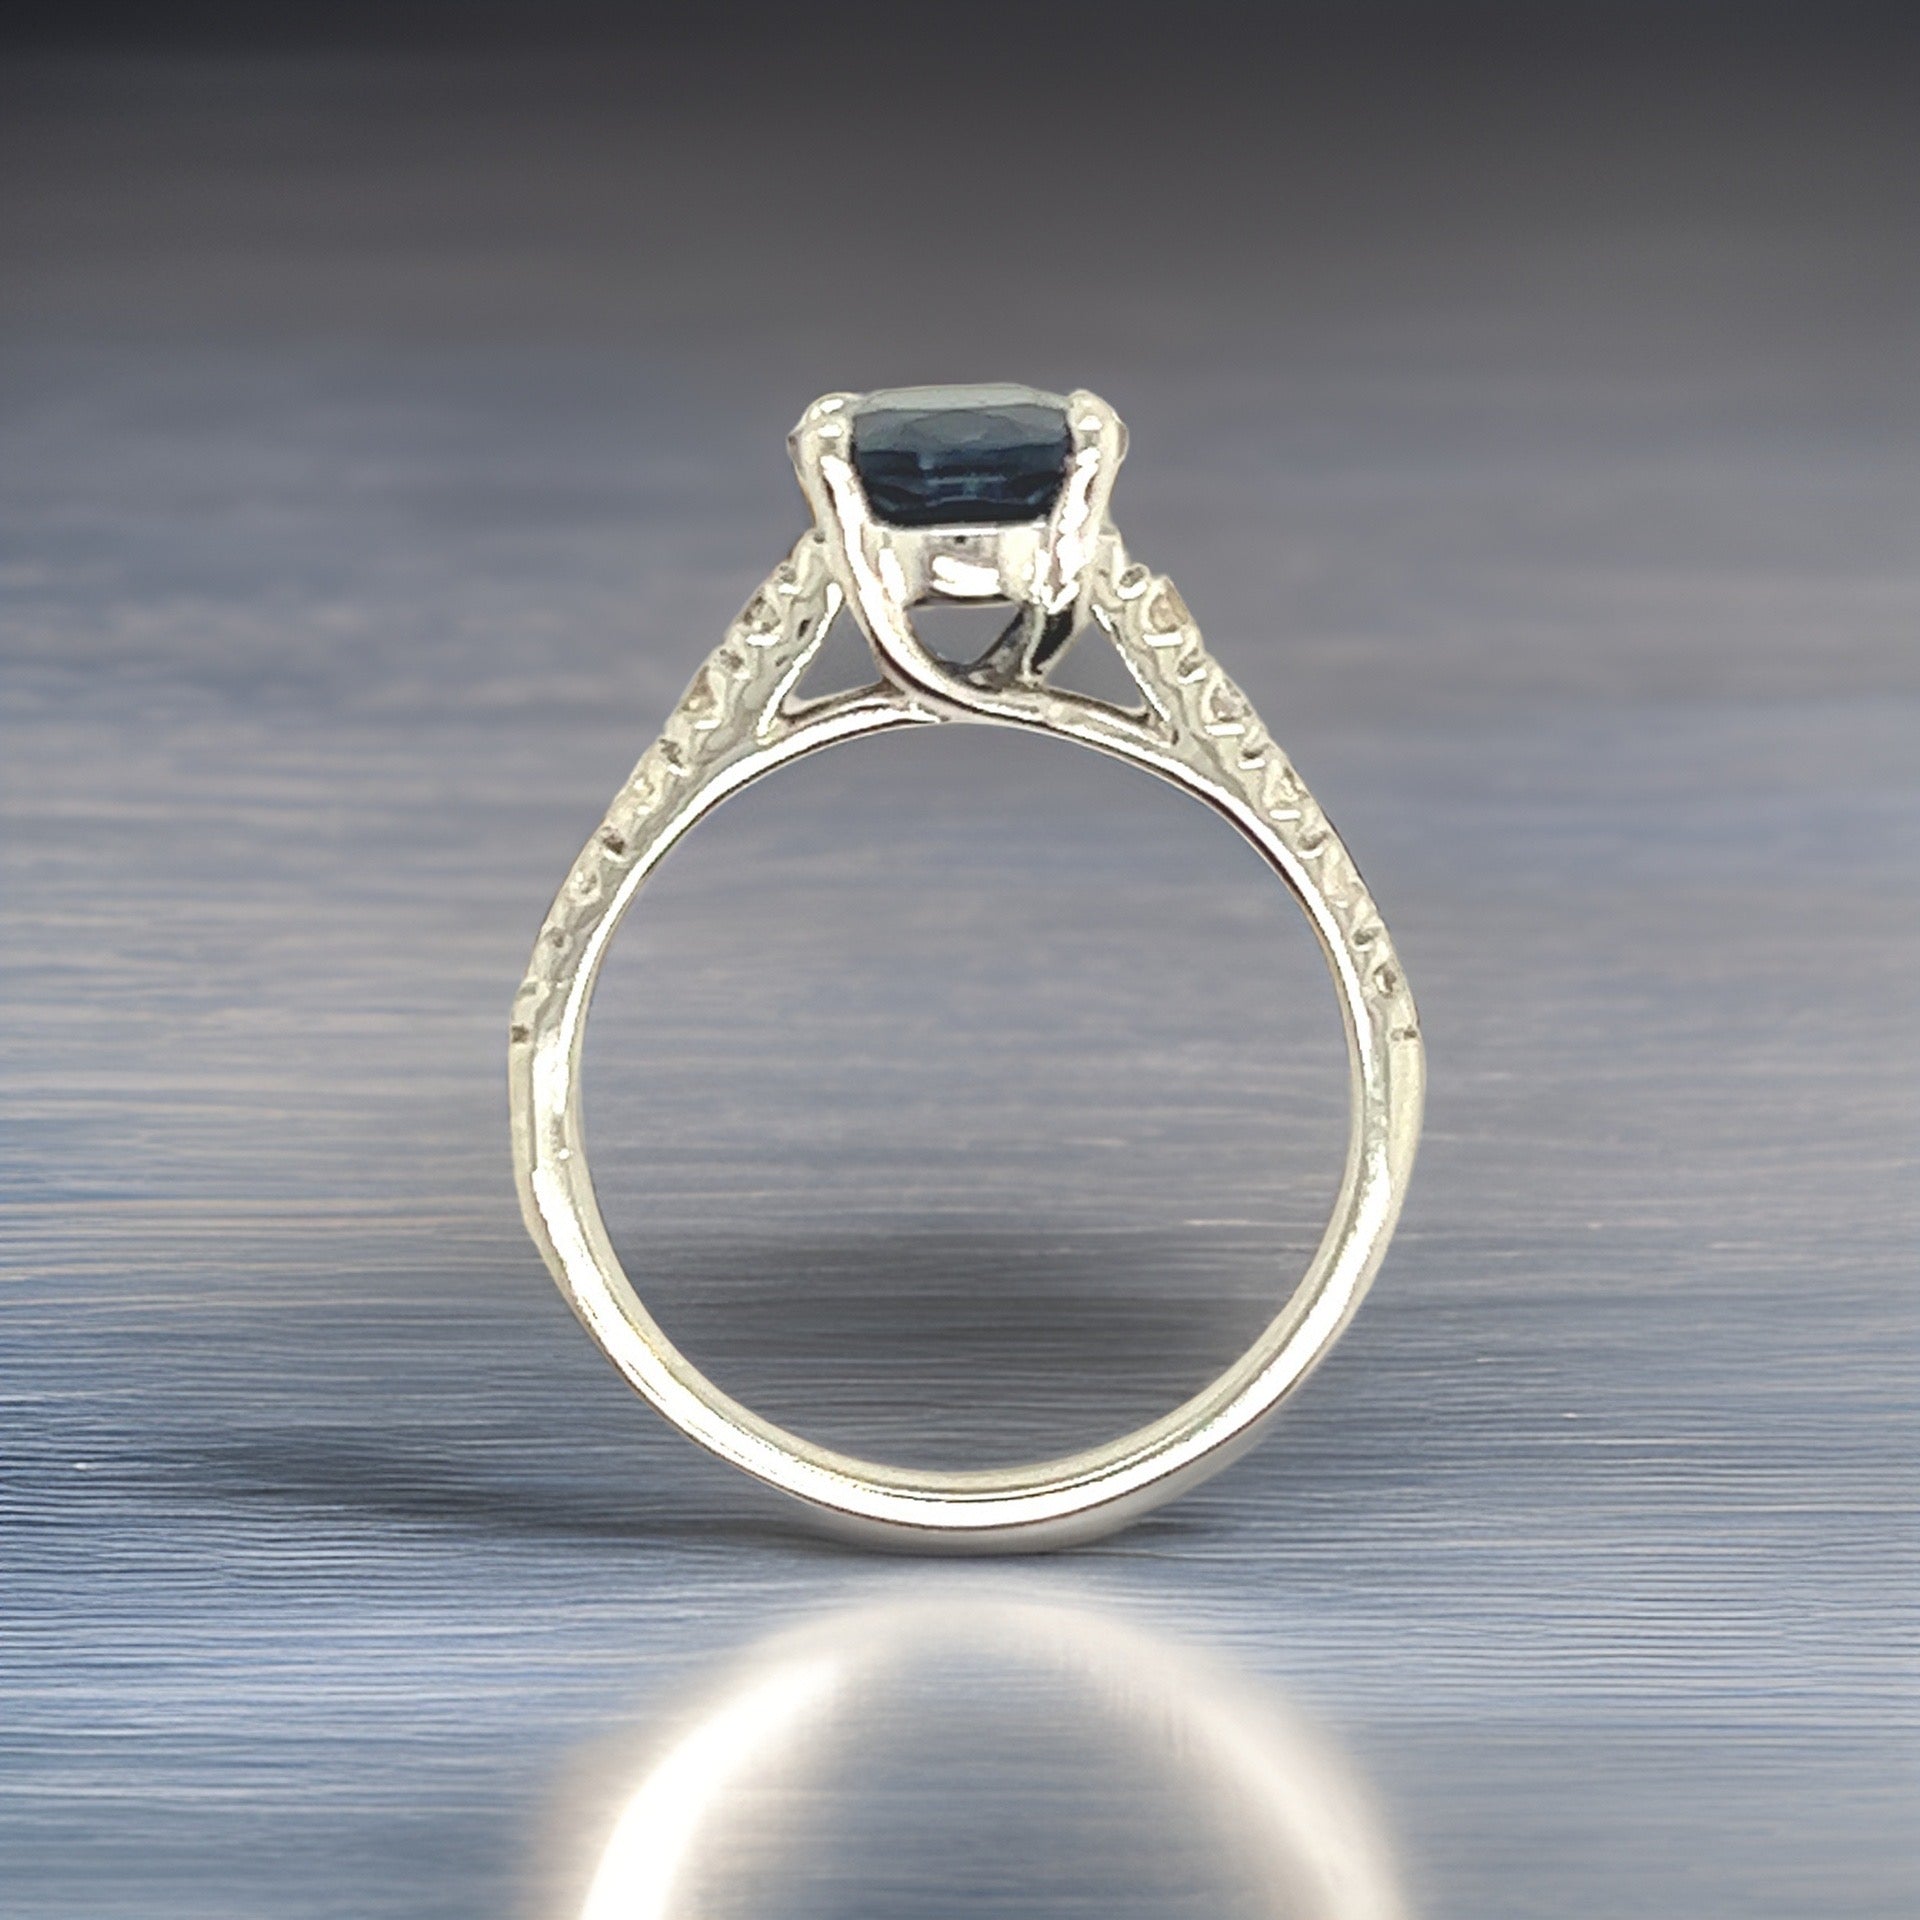 Natural Sapphire Diamond Ring Size 7 14k W Gold 3 TCW Certified $2,990 216680 - Certified Fine Jewelry